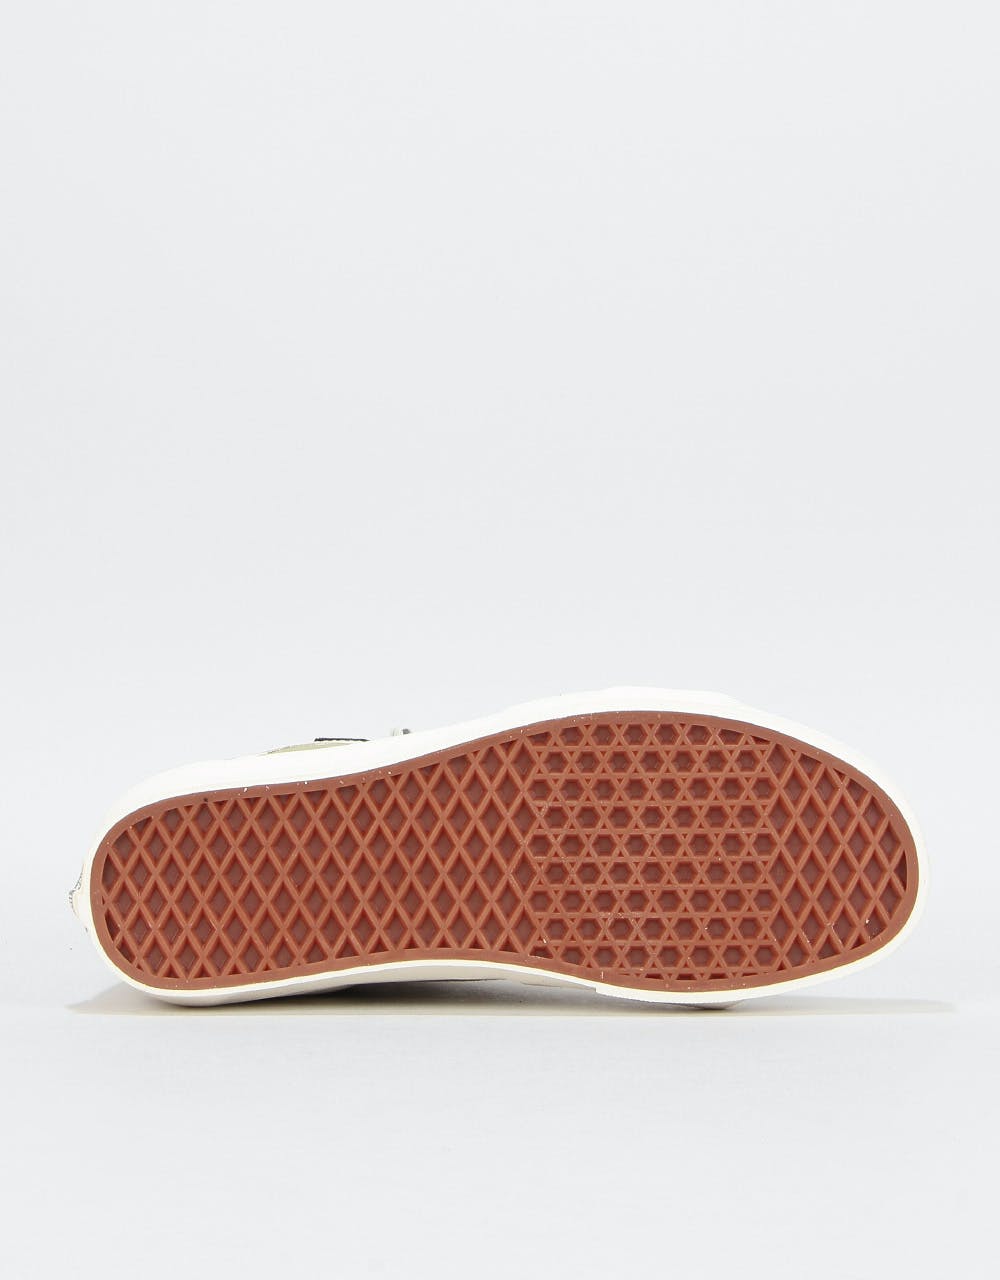 Vans Sk8-Hi Skate Shoes - (Cordura) White Asparagus/Camo